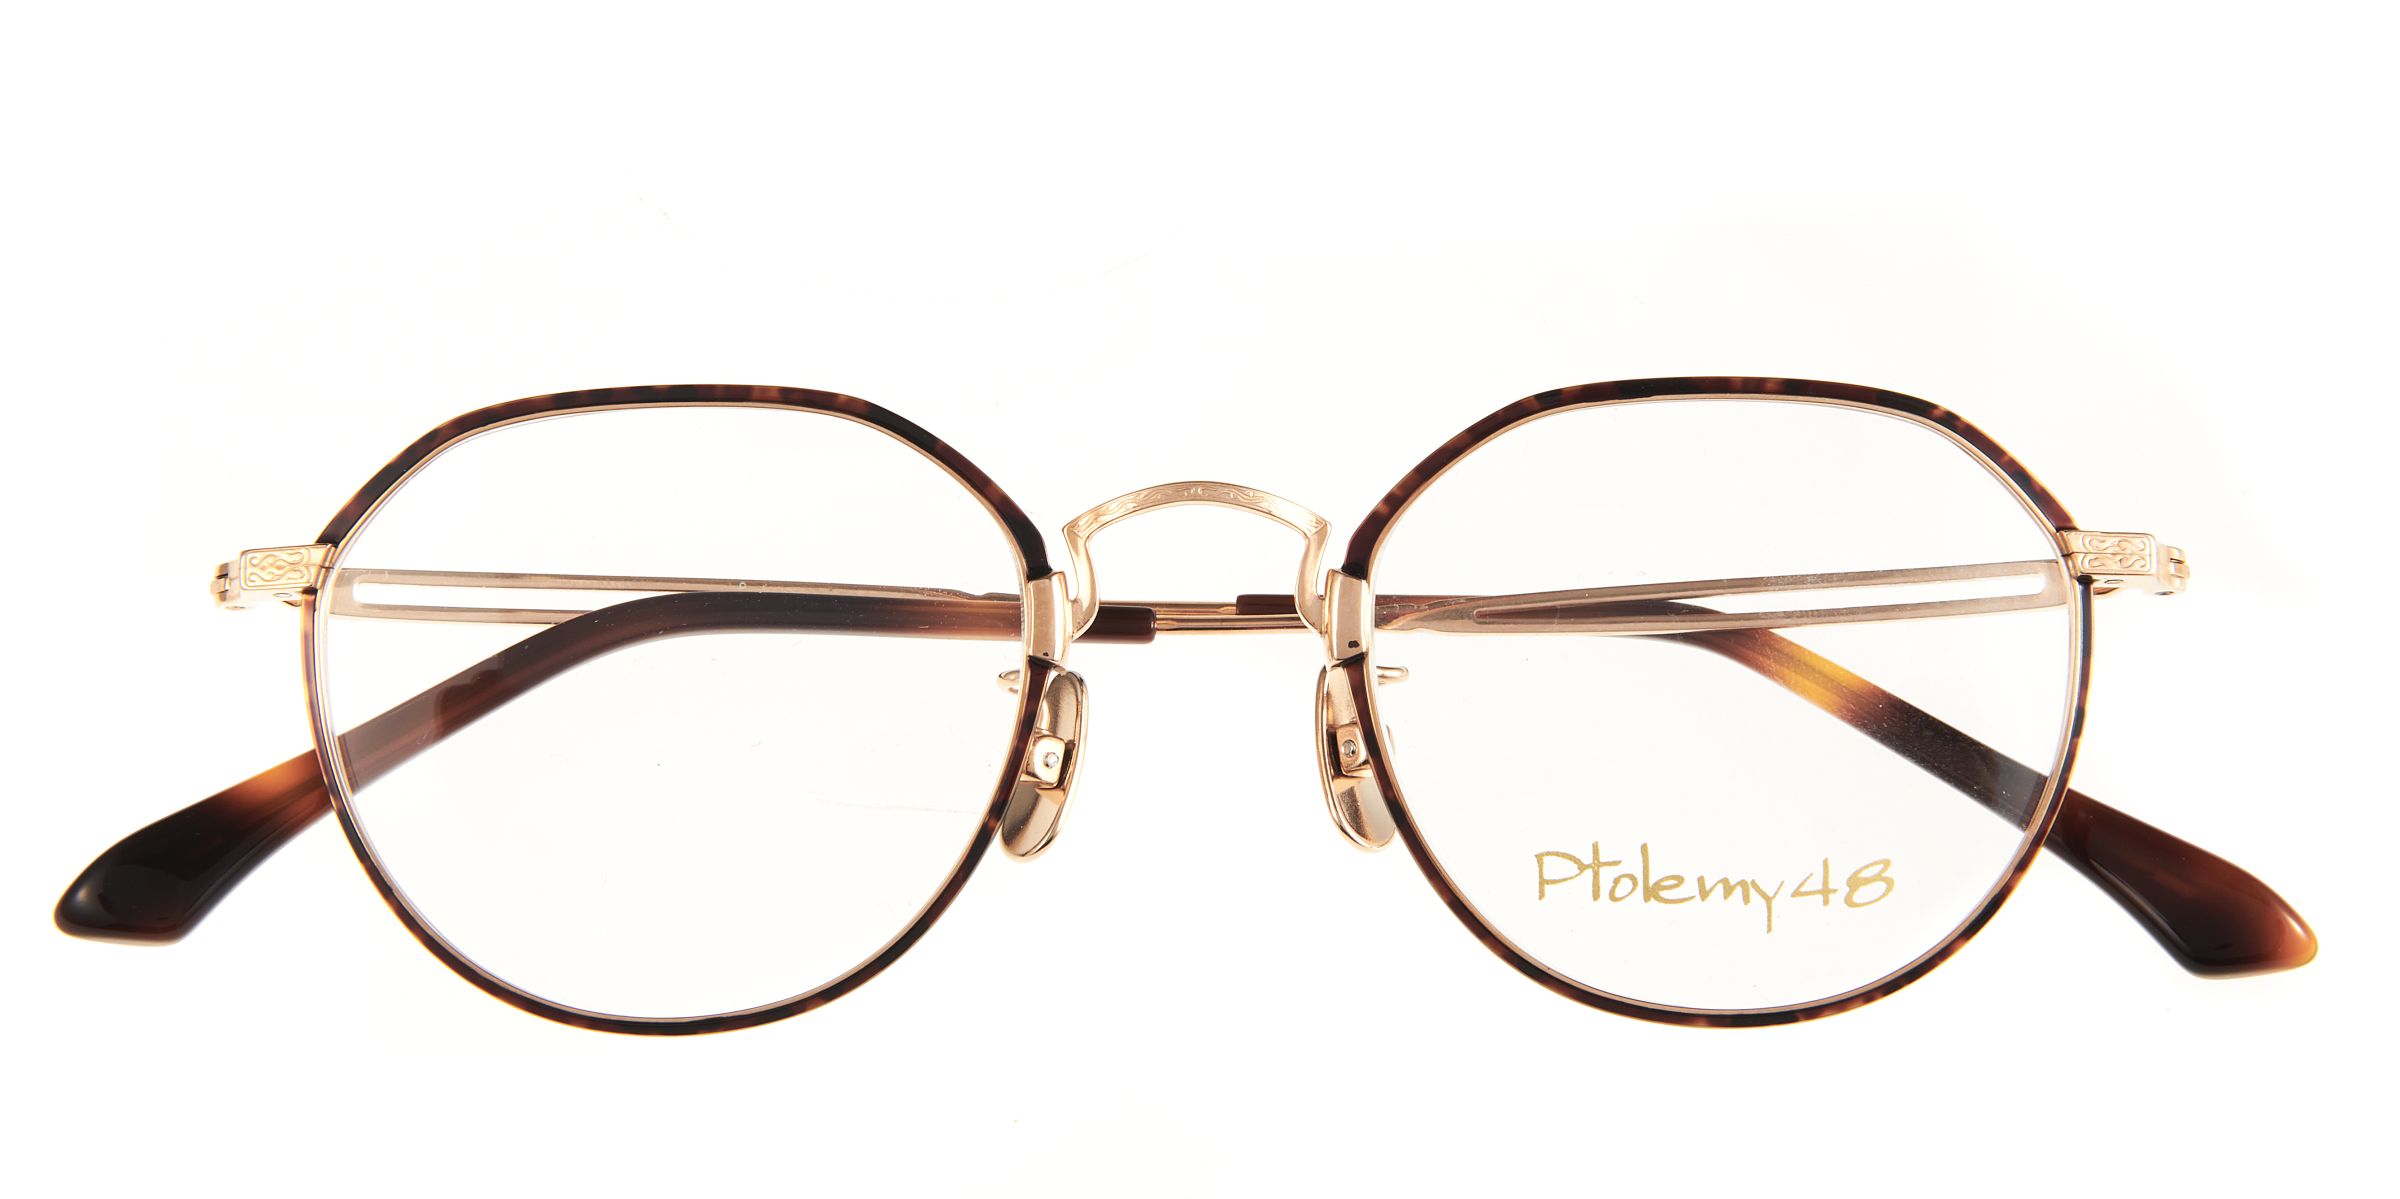 EMPEROR E-087 / EYEWEAR :: Ptolemy48（トレミーフォーティエイト） 日本の眼鏡職人が作り出した眼鏡フレームブランド